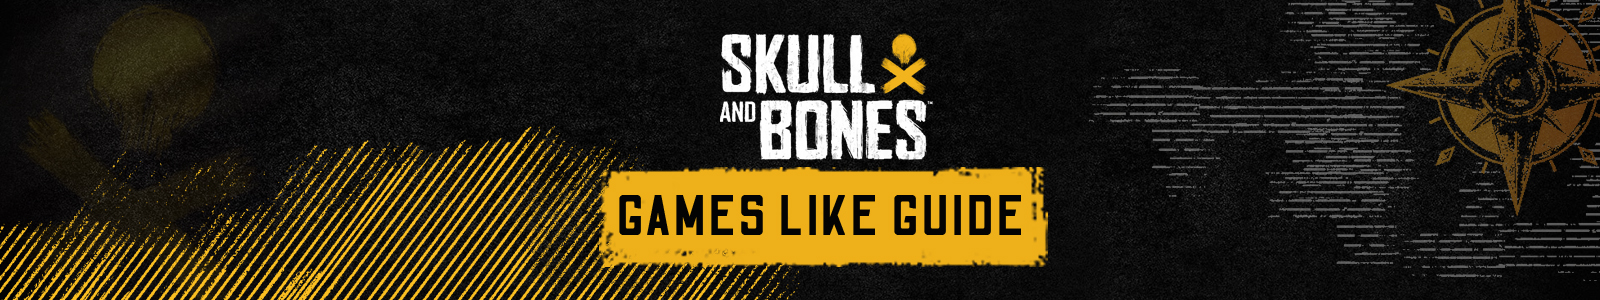 Skull & Bones Spiele wie Anleitung